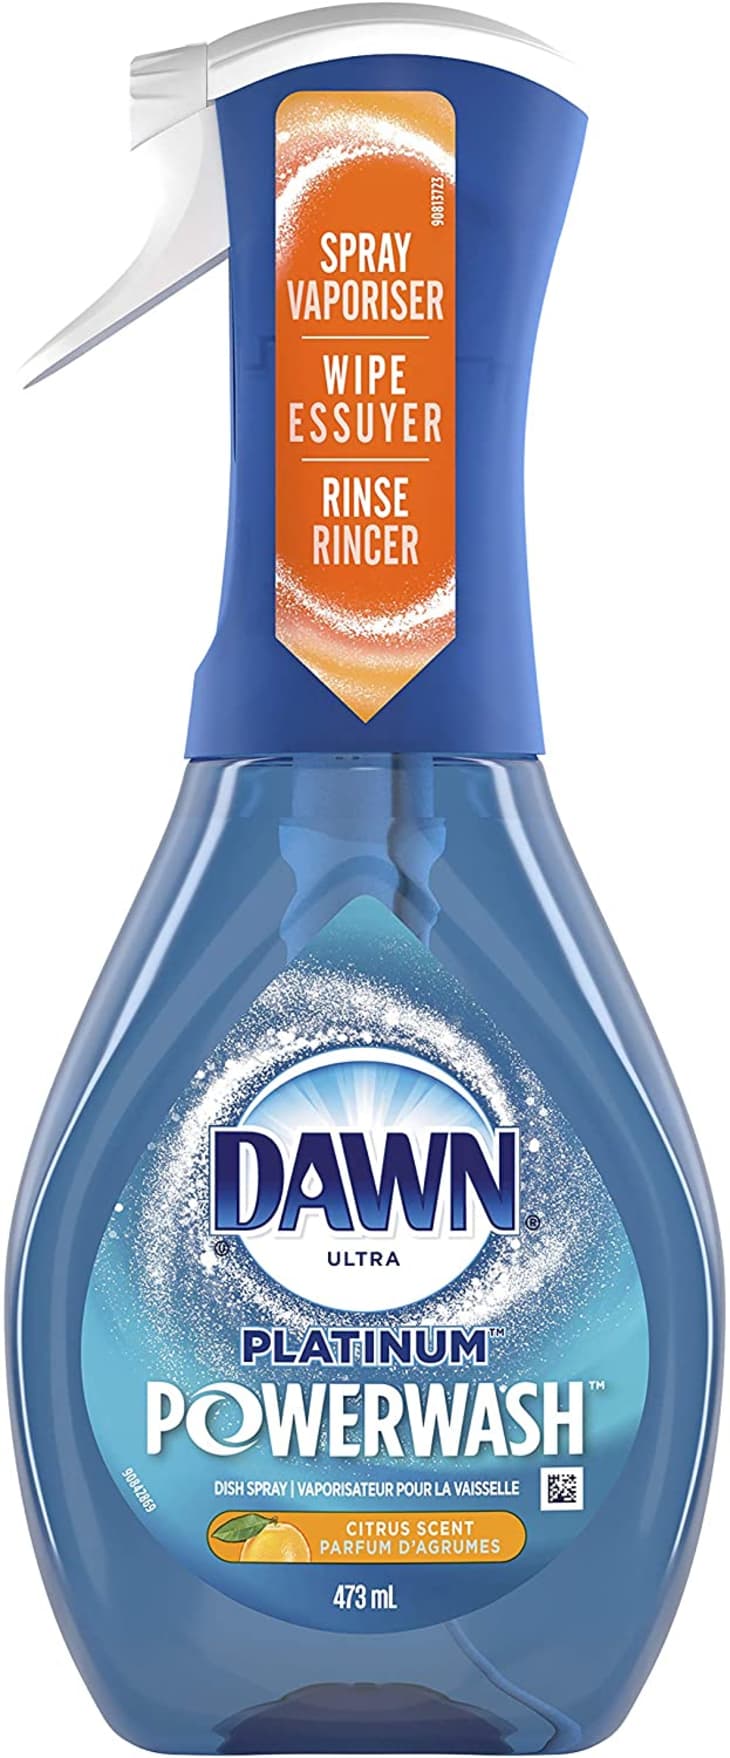 Product Image: Dawn Ultra Powerwash Dish Spray Citrus Scent